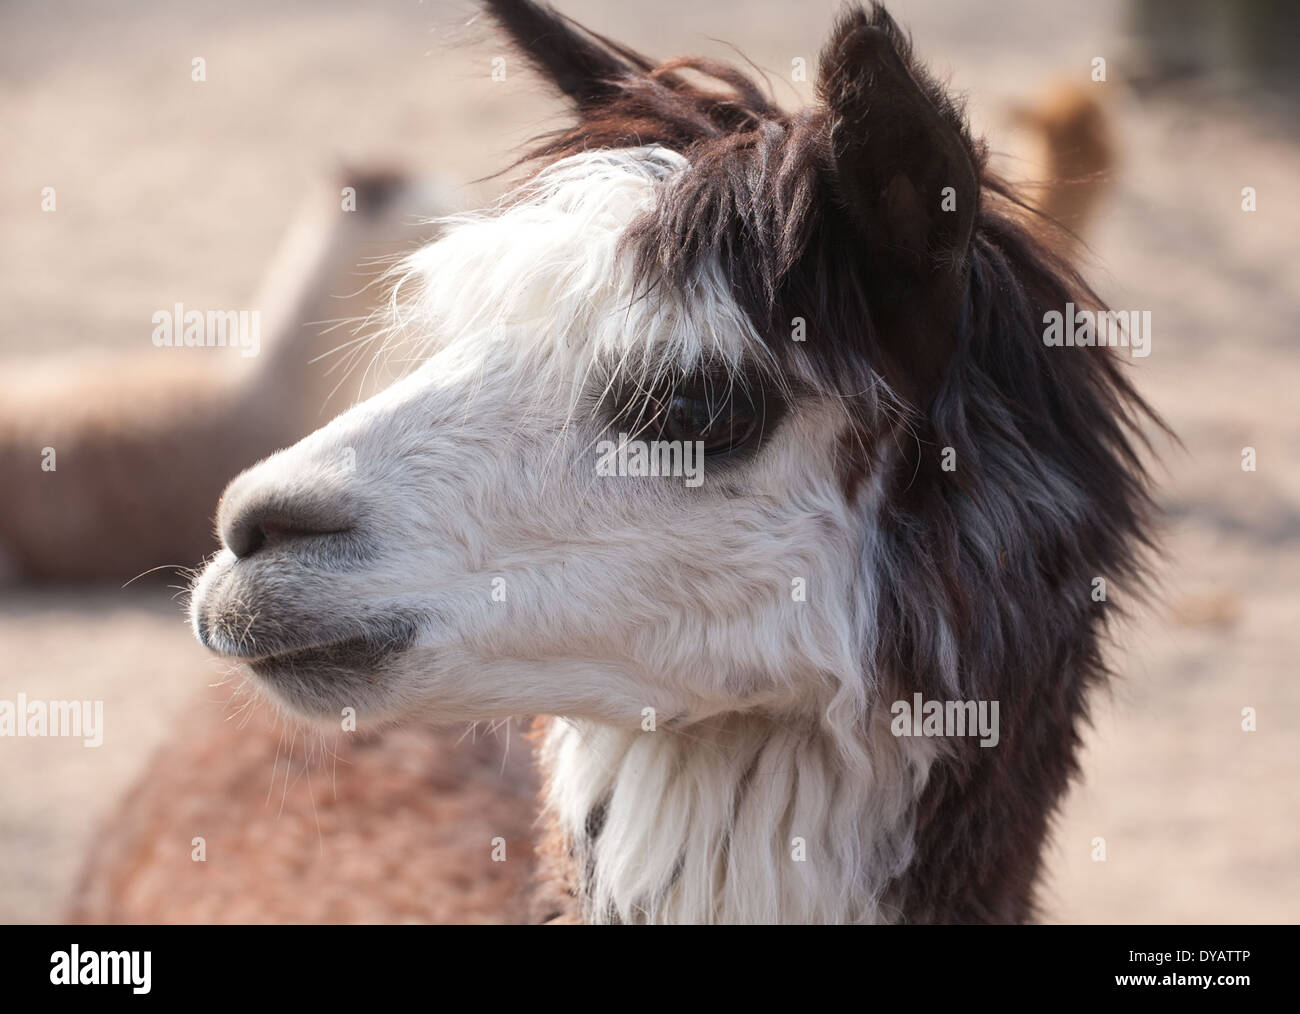 niedliche Lama Tier Closeup Portrait im Profil Stockfoto